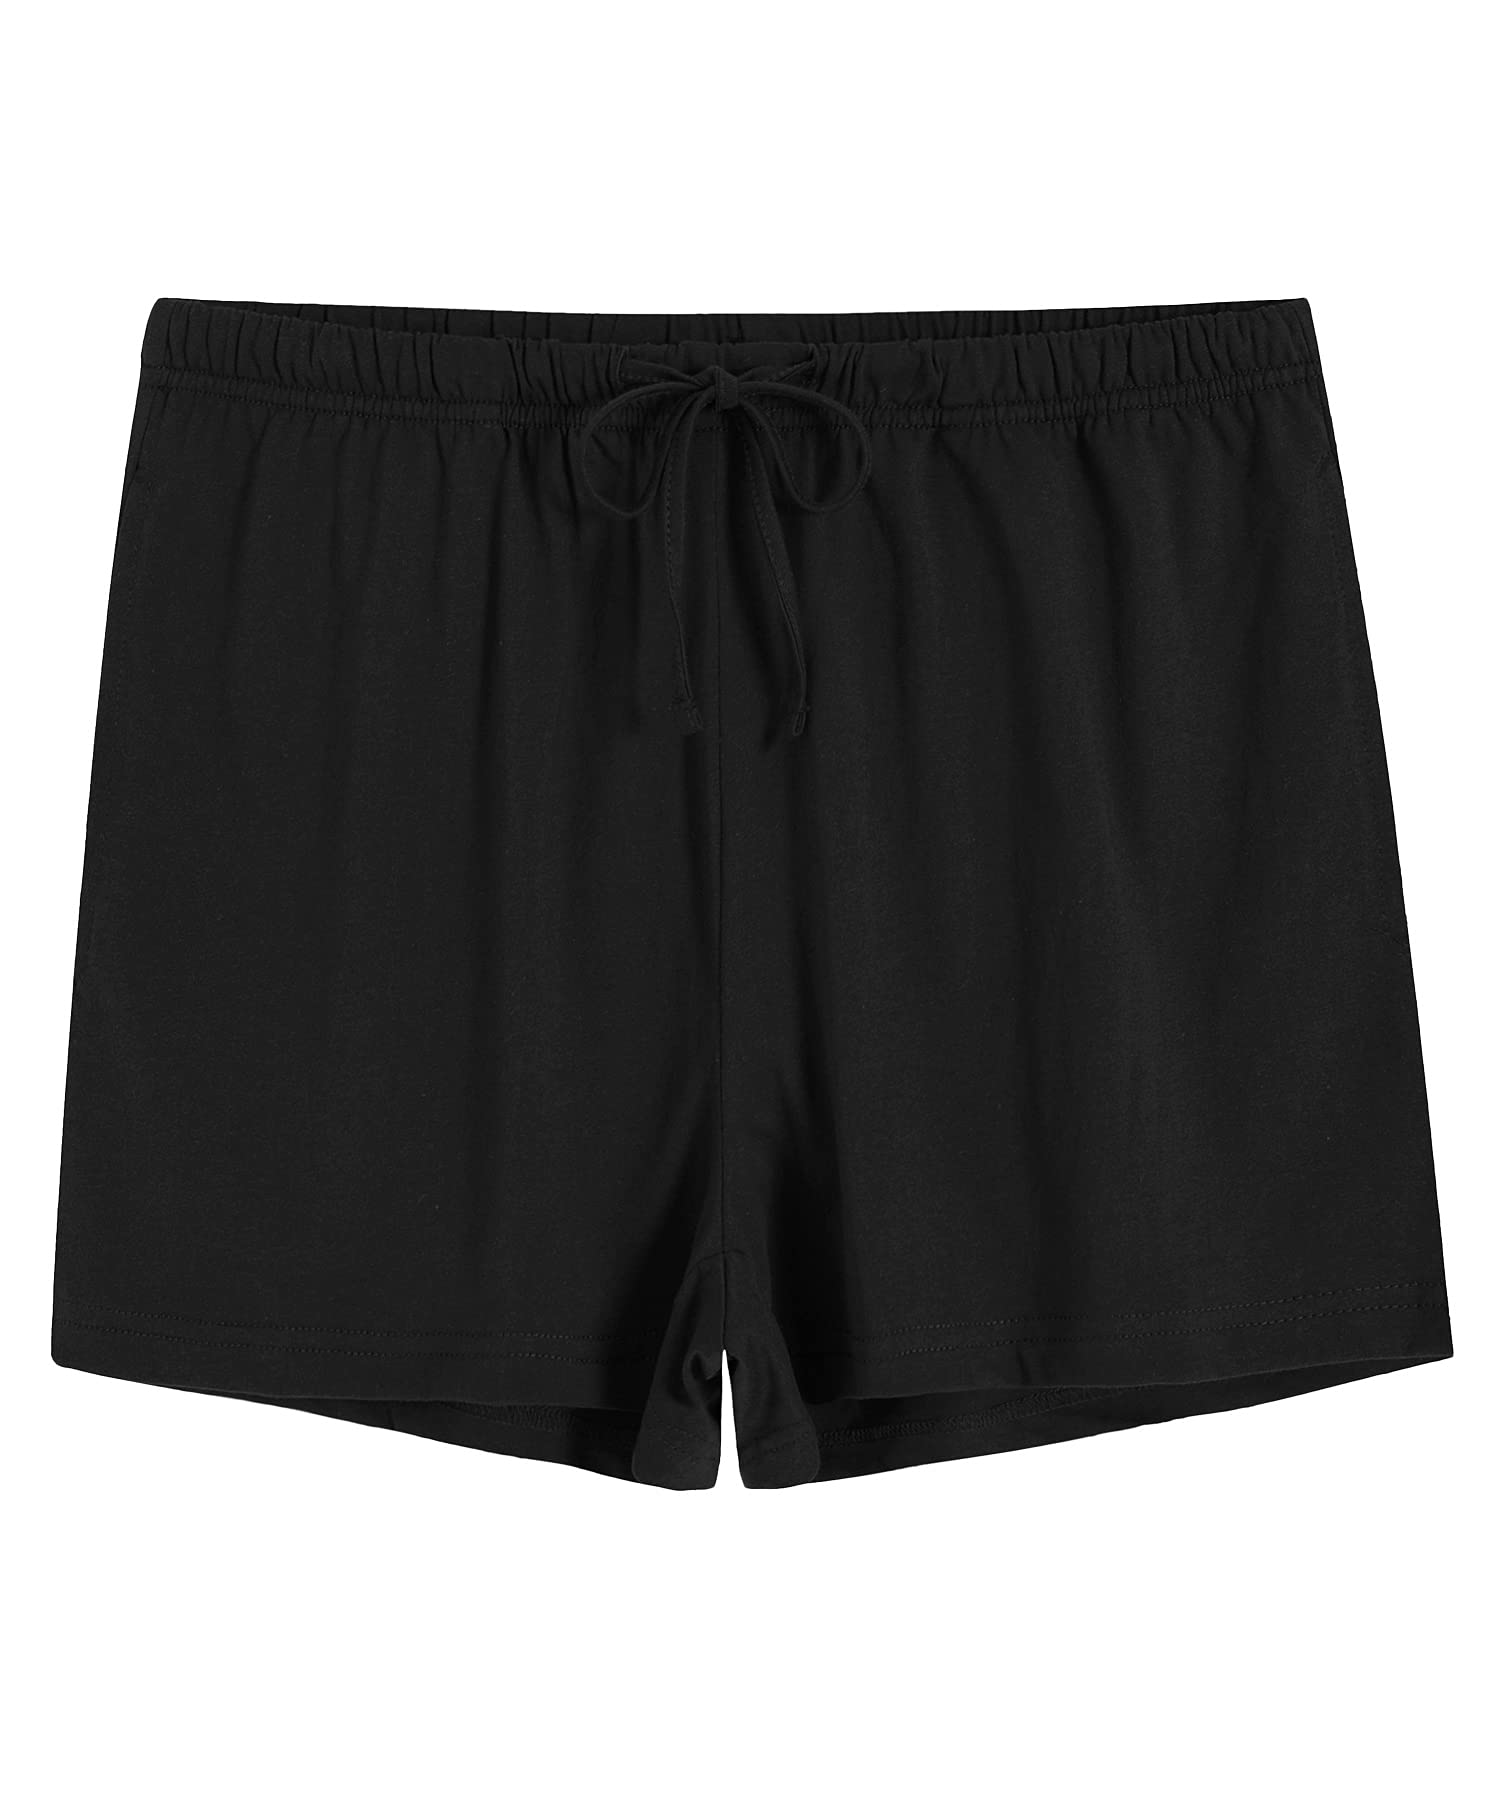 Women's Pajama Shorts Drawstring Sleep Shorts Cotton Sleepwear Lounge Pj  Bottoms with Pockets, Black&light Grey-2 Pack, XX-Large : :  Everything Else